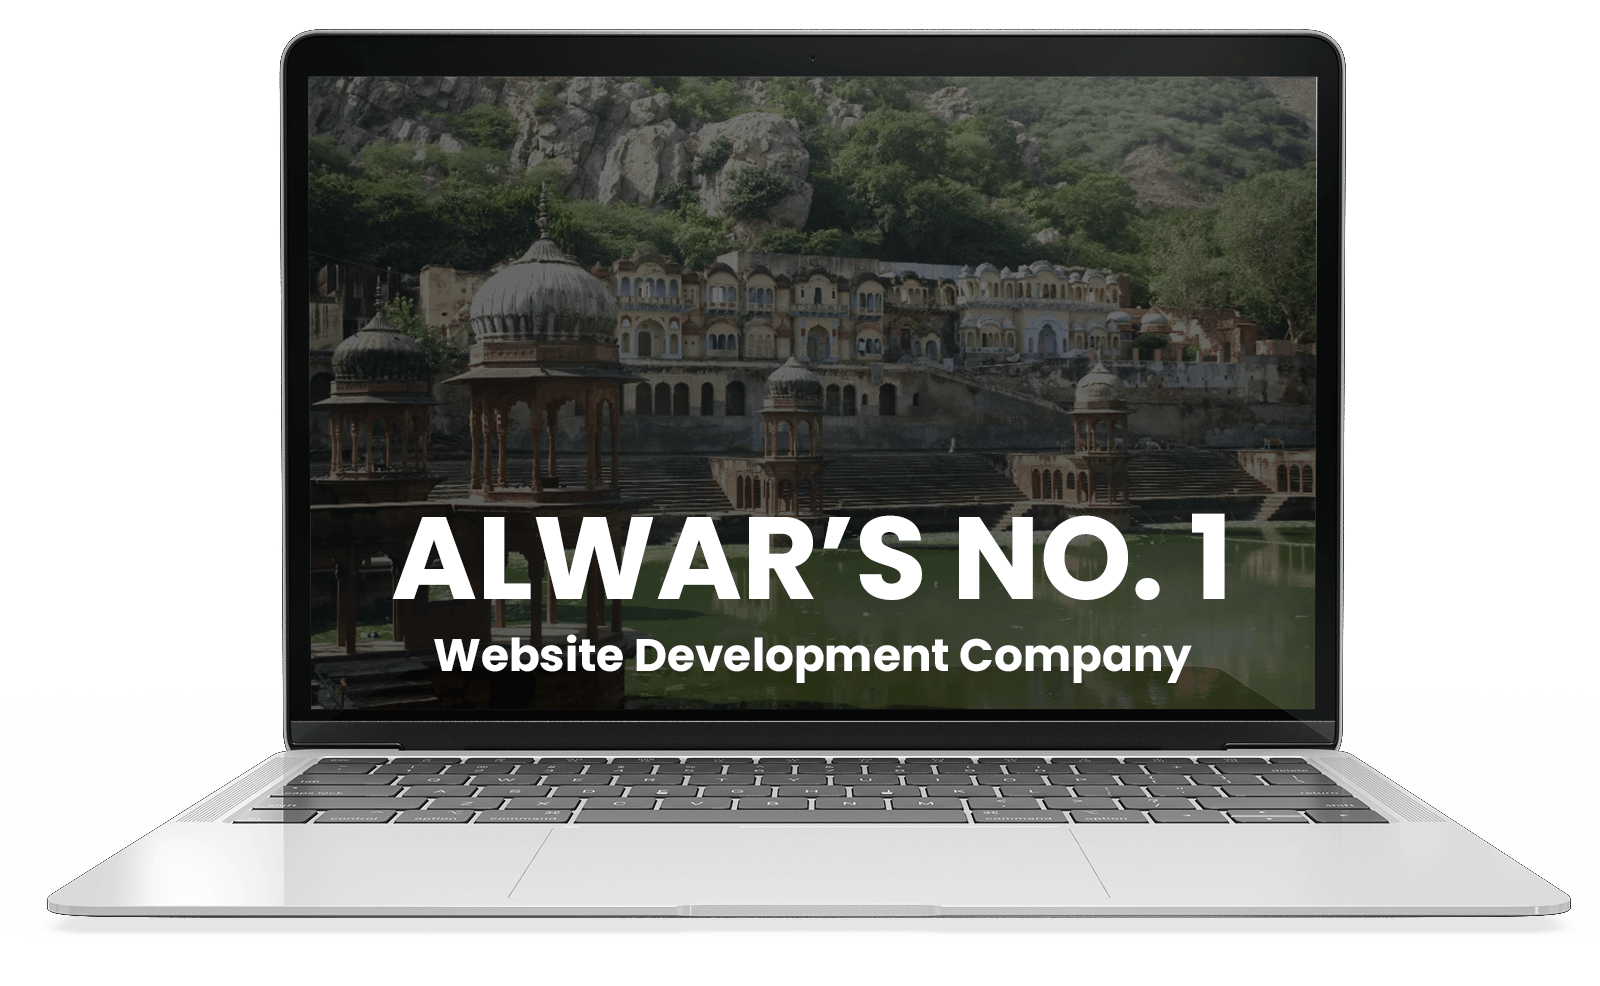 Web development company in Alwar